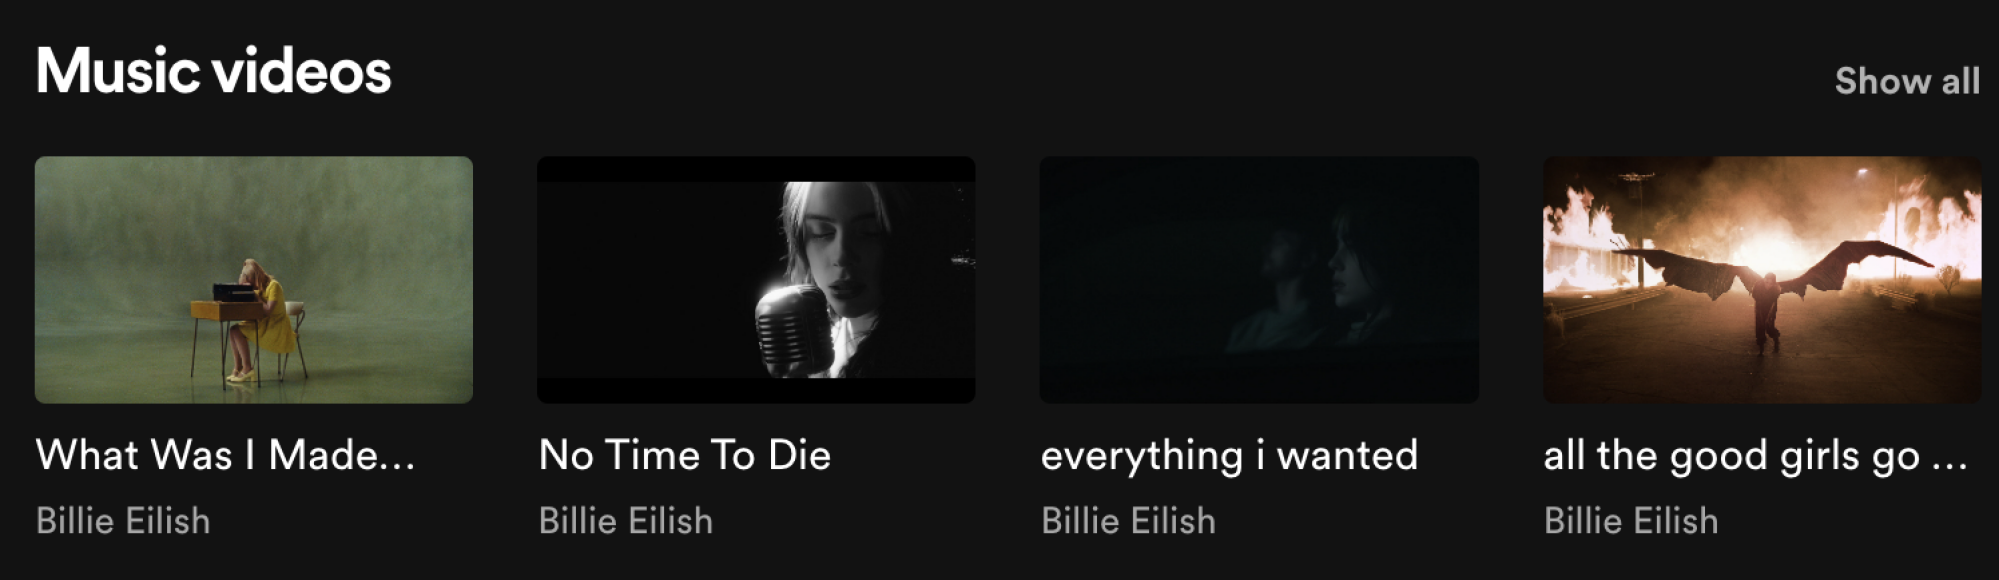 A screenshot showing Billie Eilish